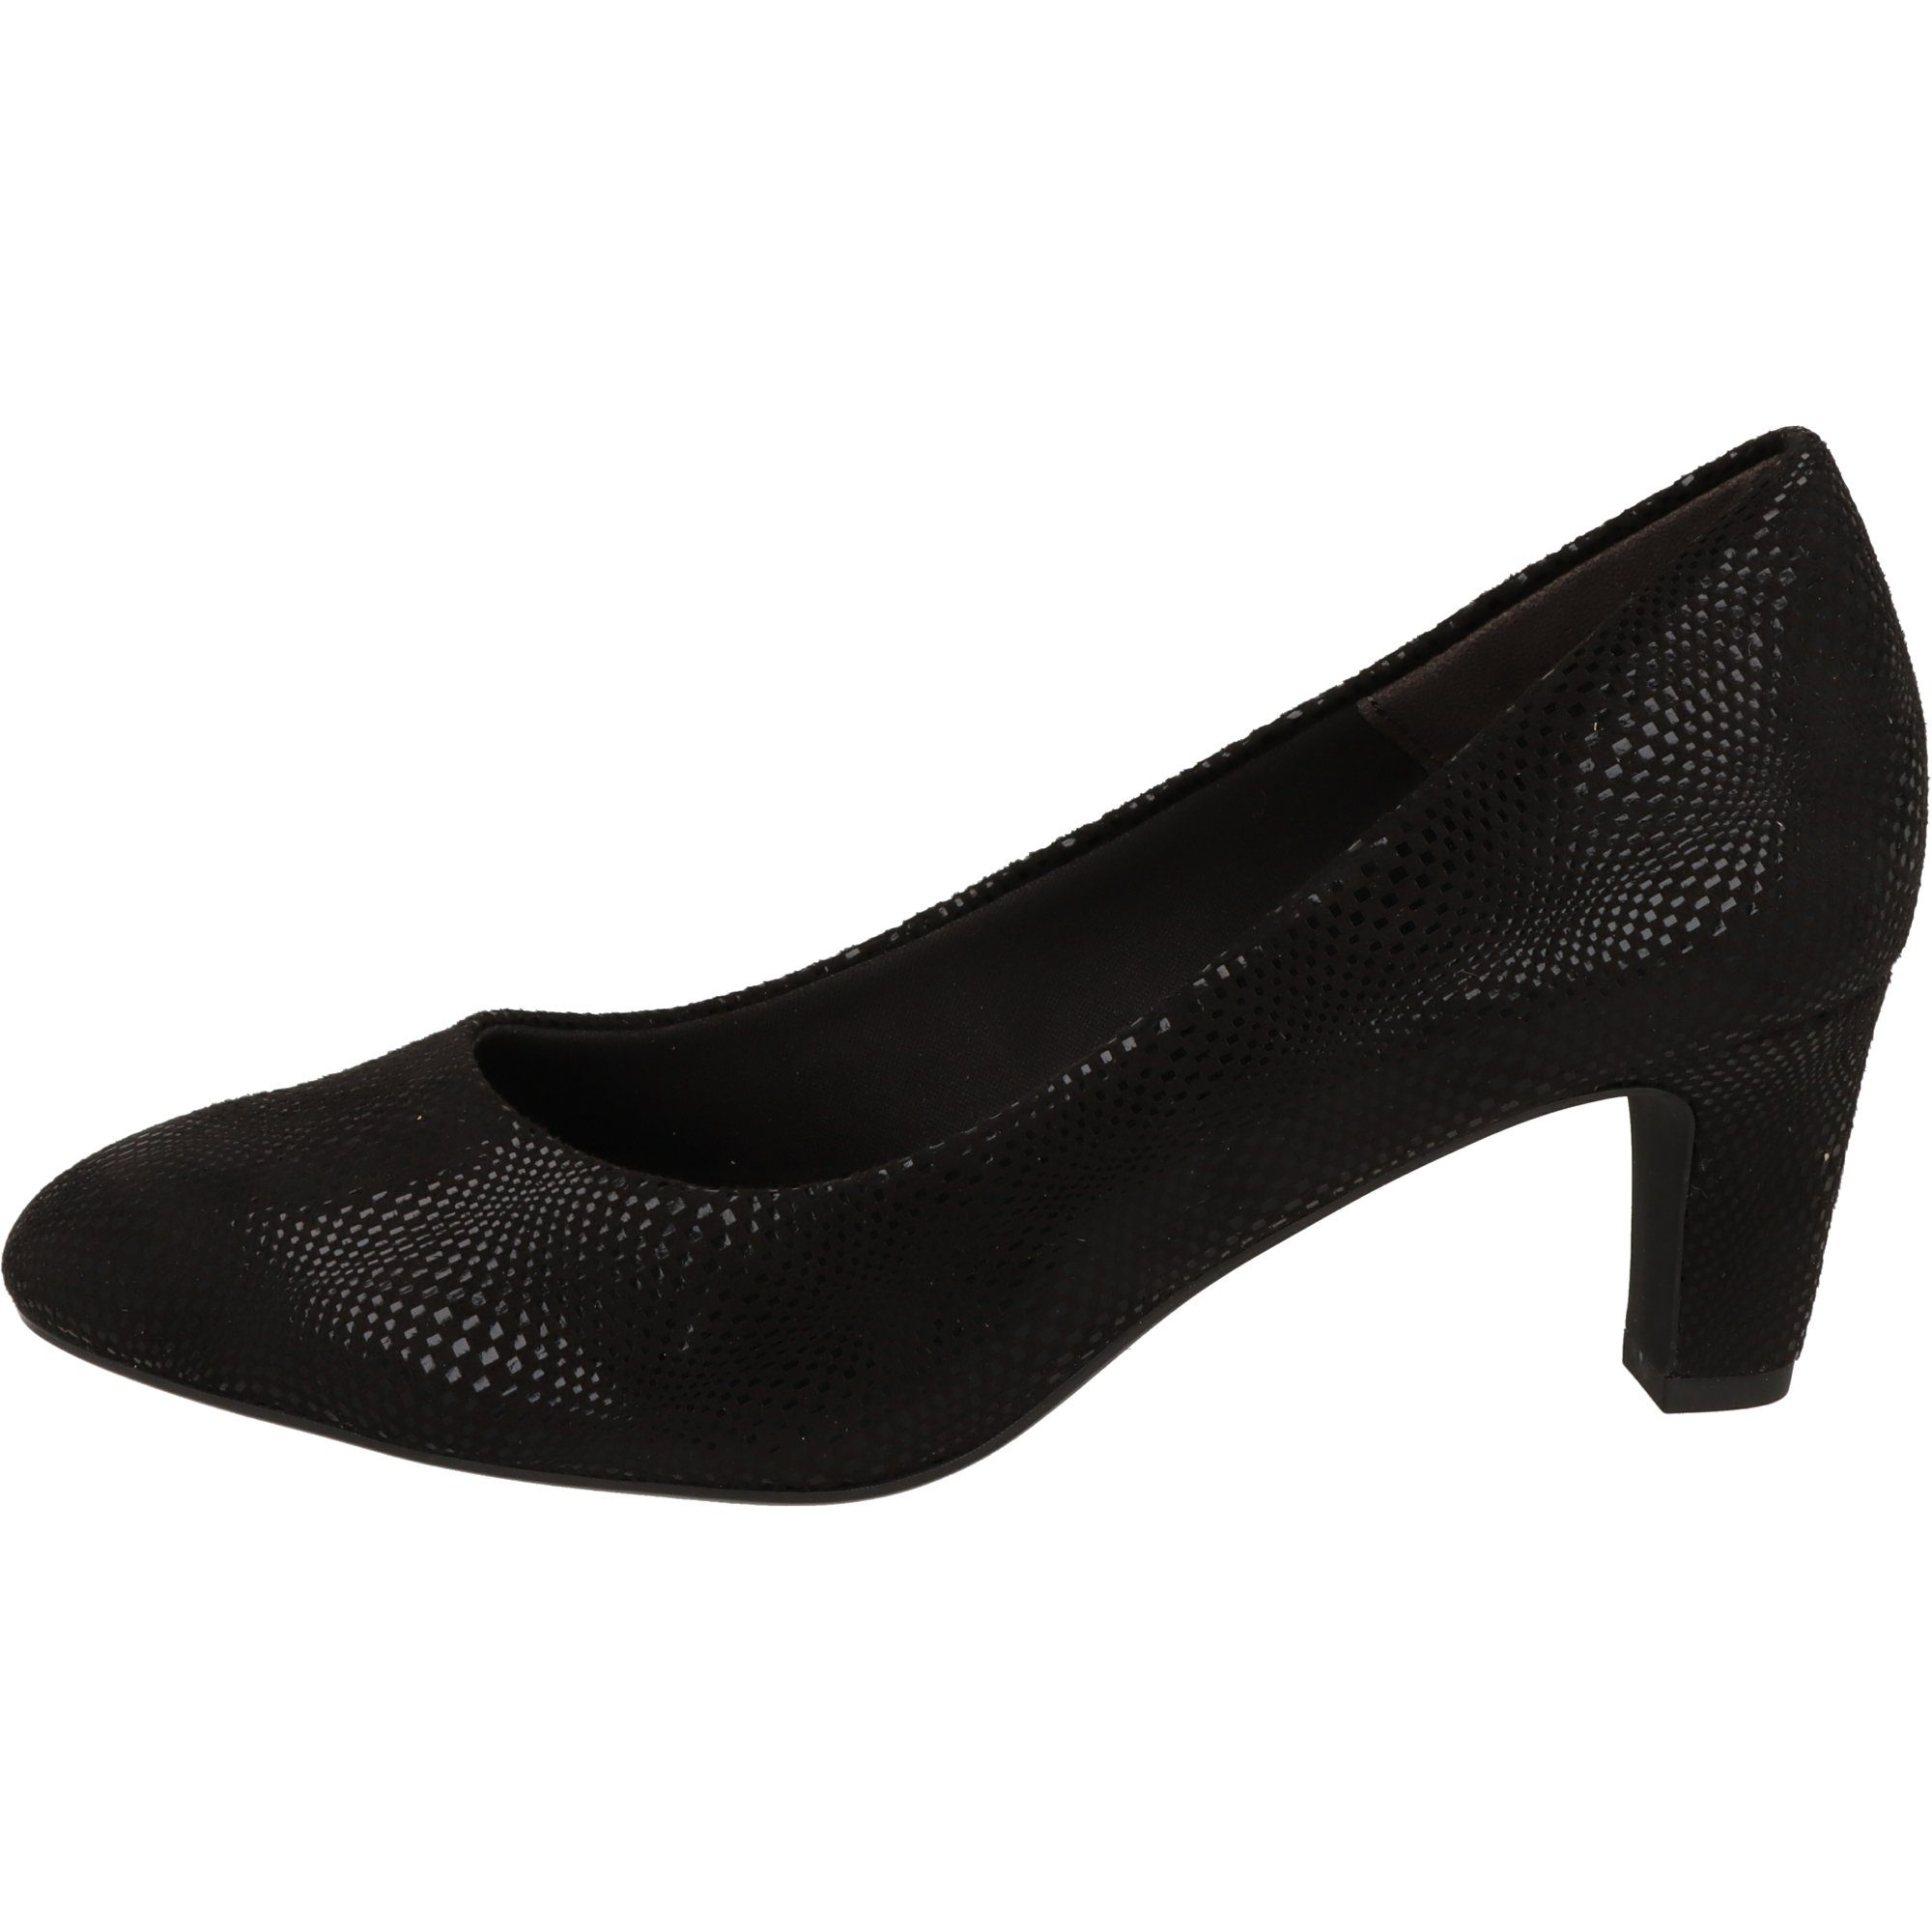 Black Vegan Struct. Schuhe 1-22418-20 Damen Pumps Tamaris elegante